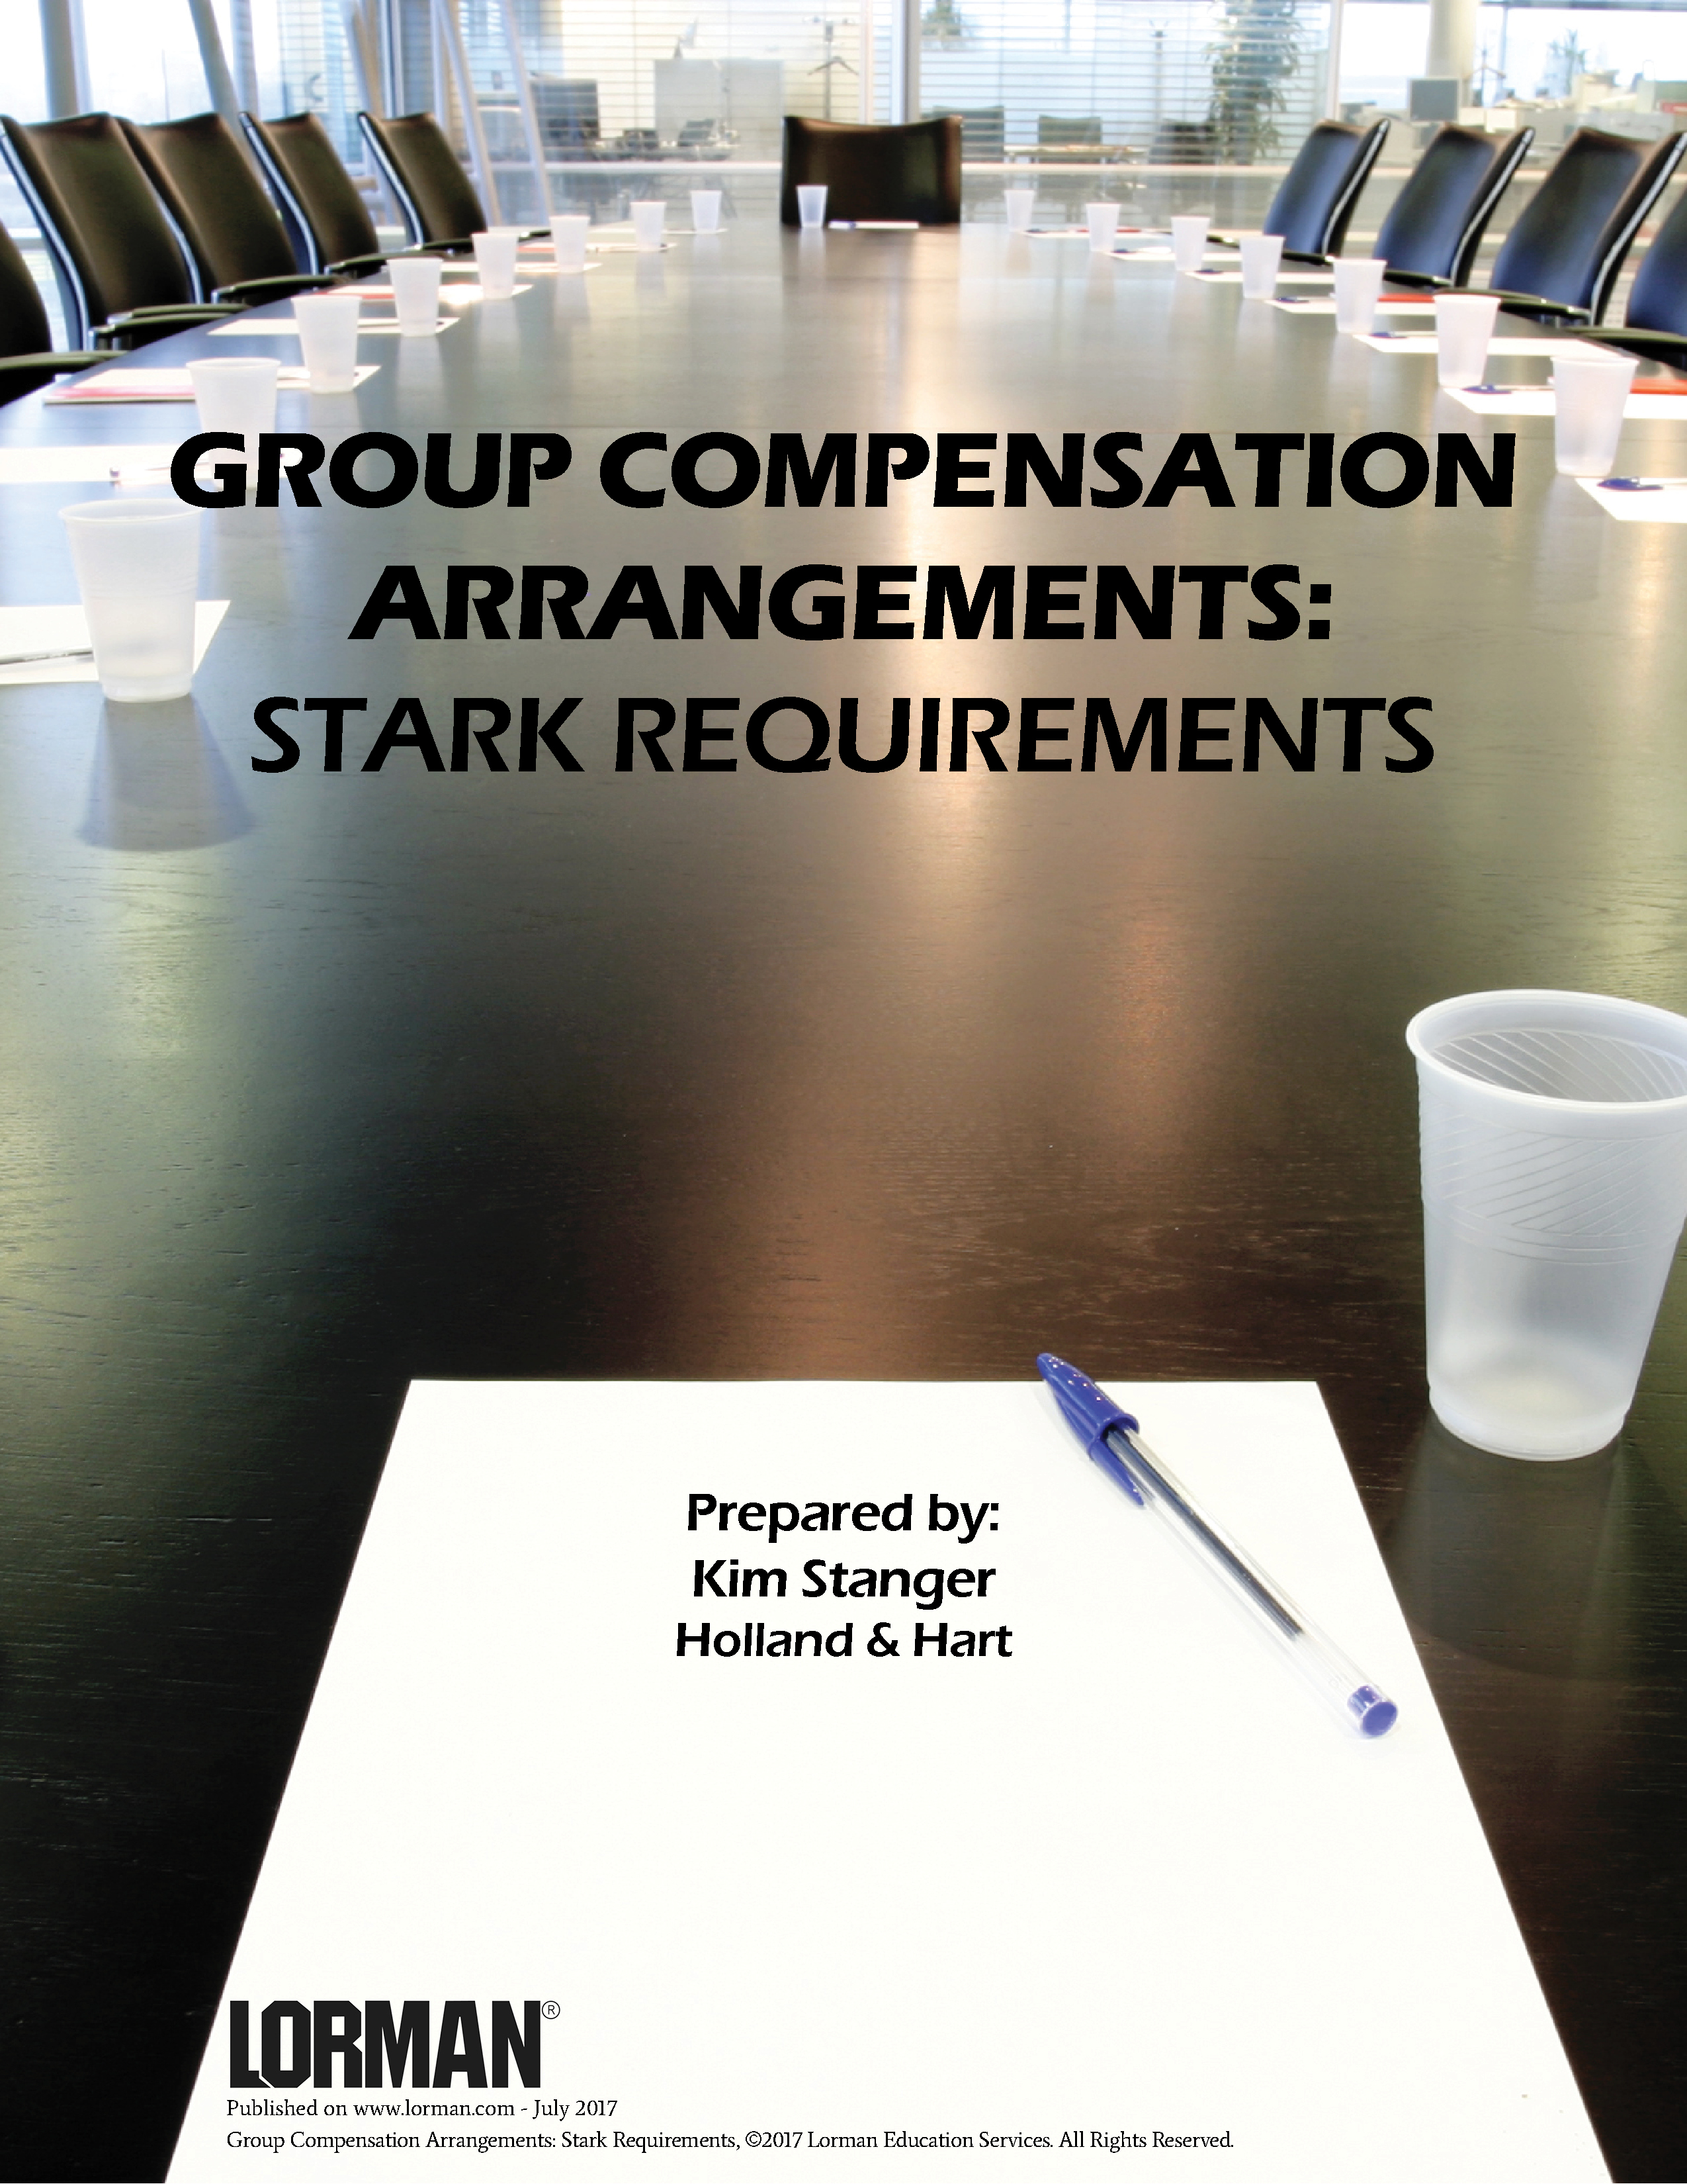 Group Compensation Arrangements: Stark Requirements